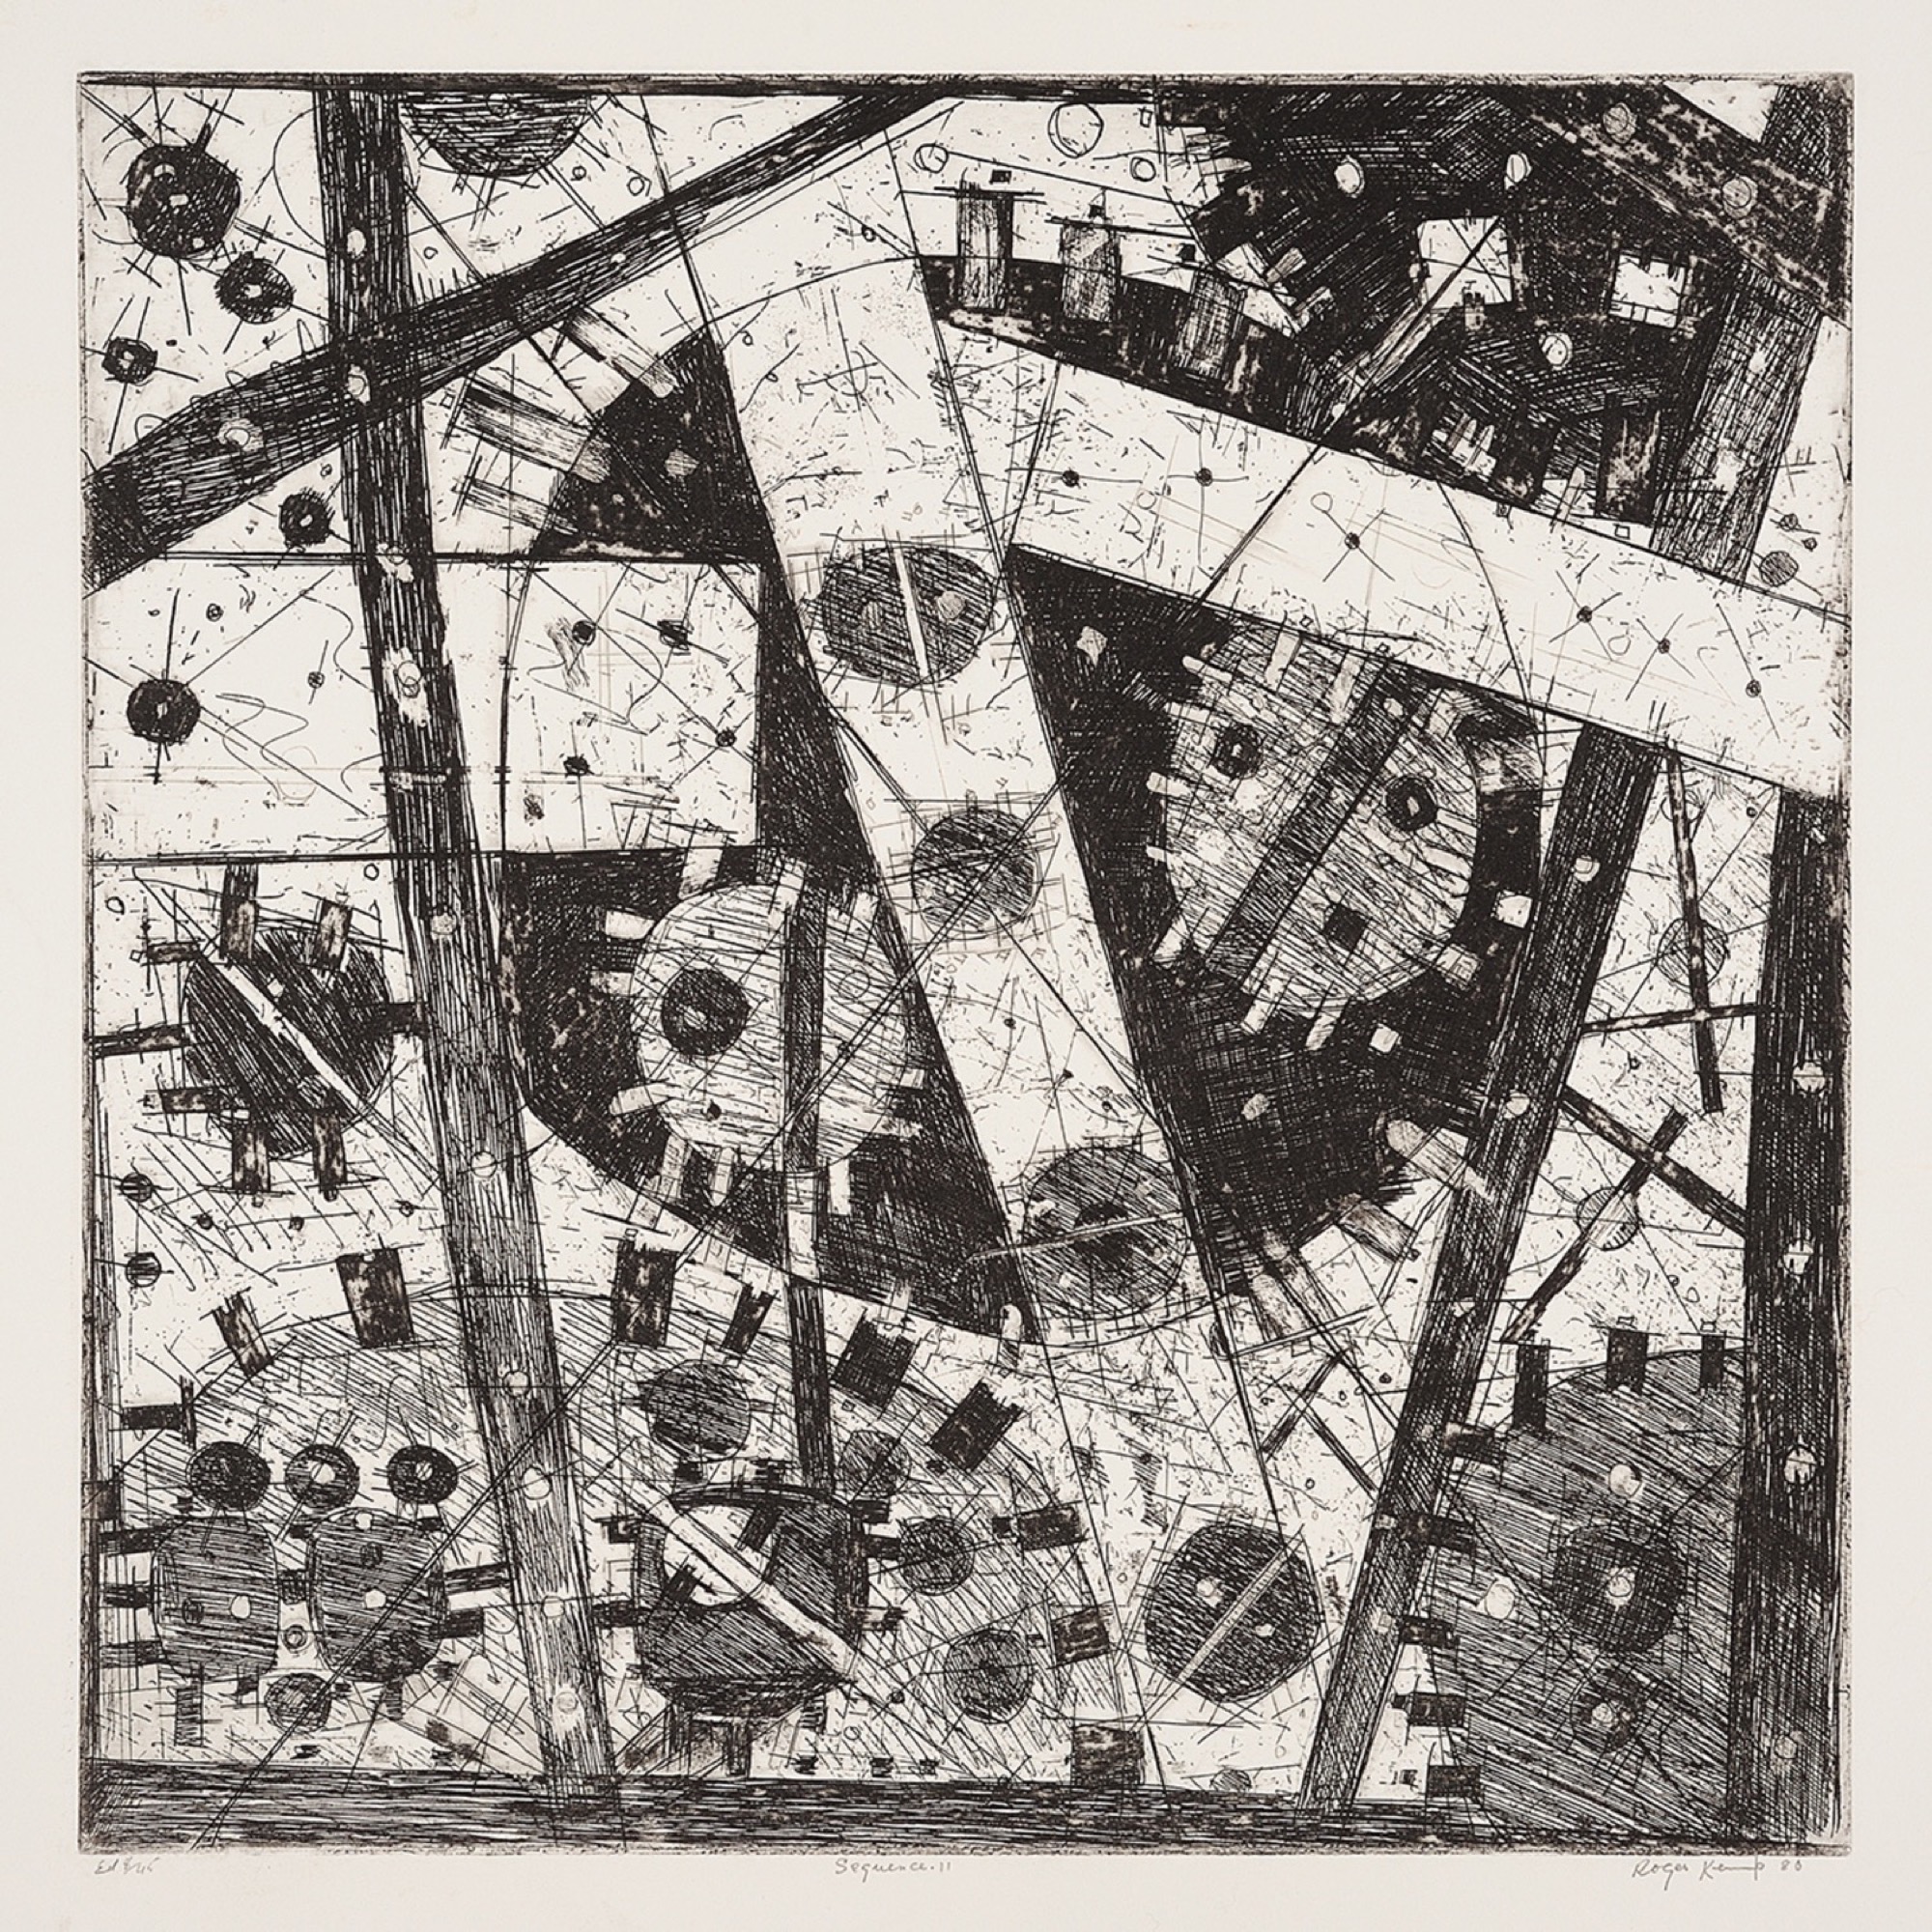 Roger Kemp, <em>Sequence Eleven</em>, 1980, etching on paper, 50.8 x 50.4 cm. Copyright Estate of Roger Kemp, Image courtesy Charles Nodrum Gallery